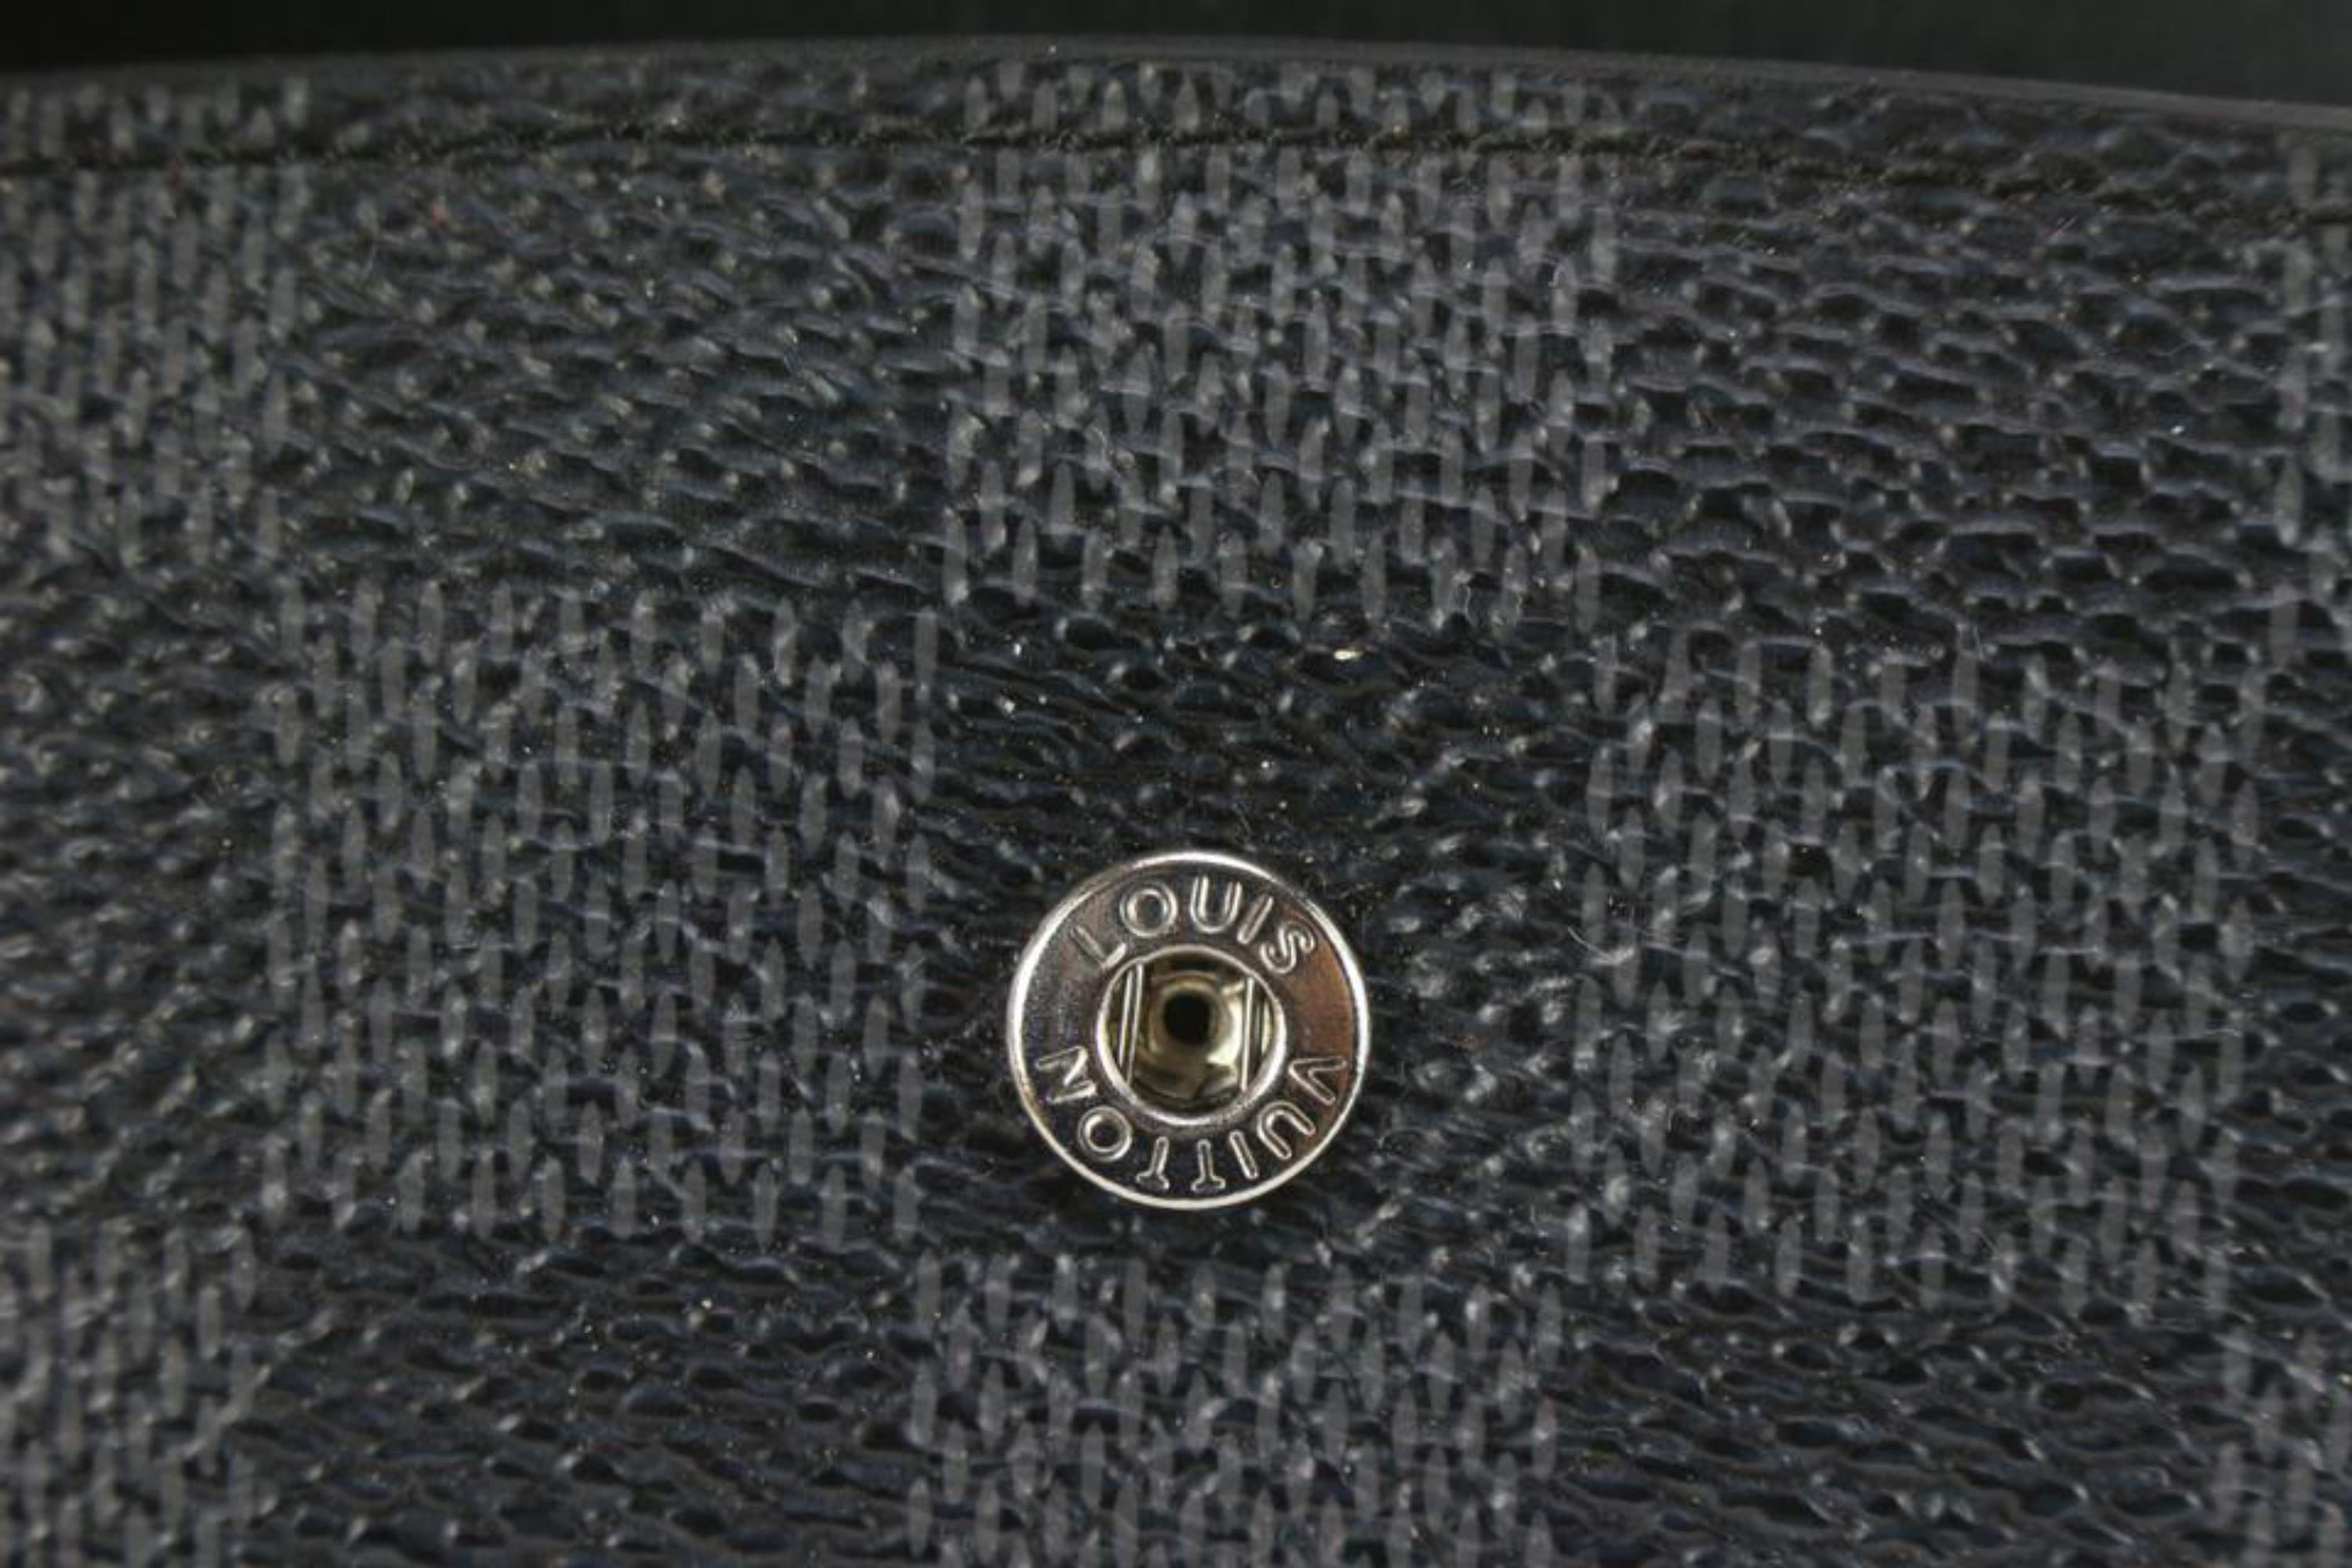 A black damier ebene canvas weekend bag by Louis Vuitton. - Bukowskis